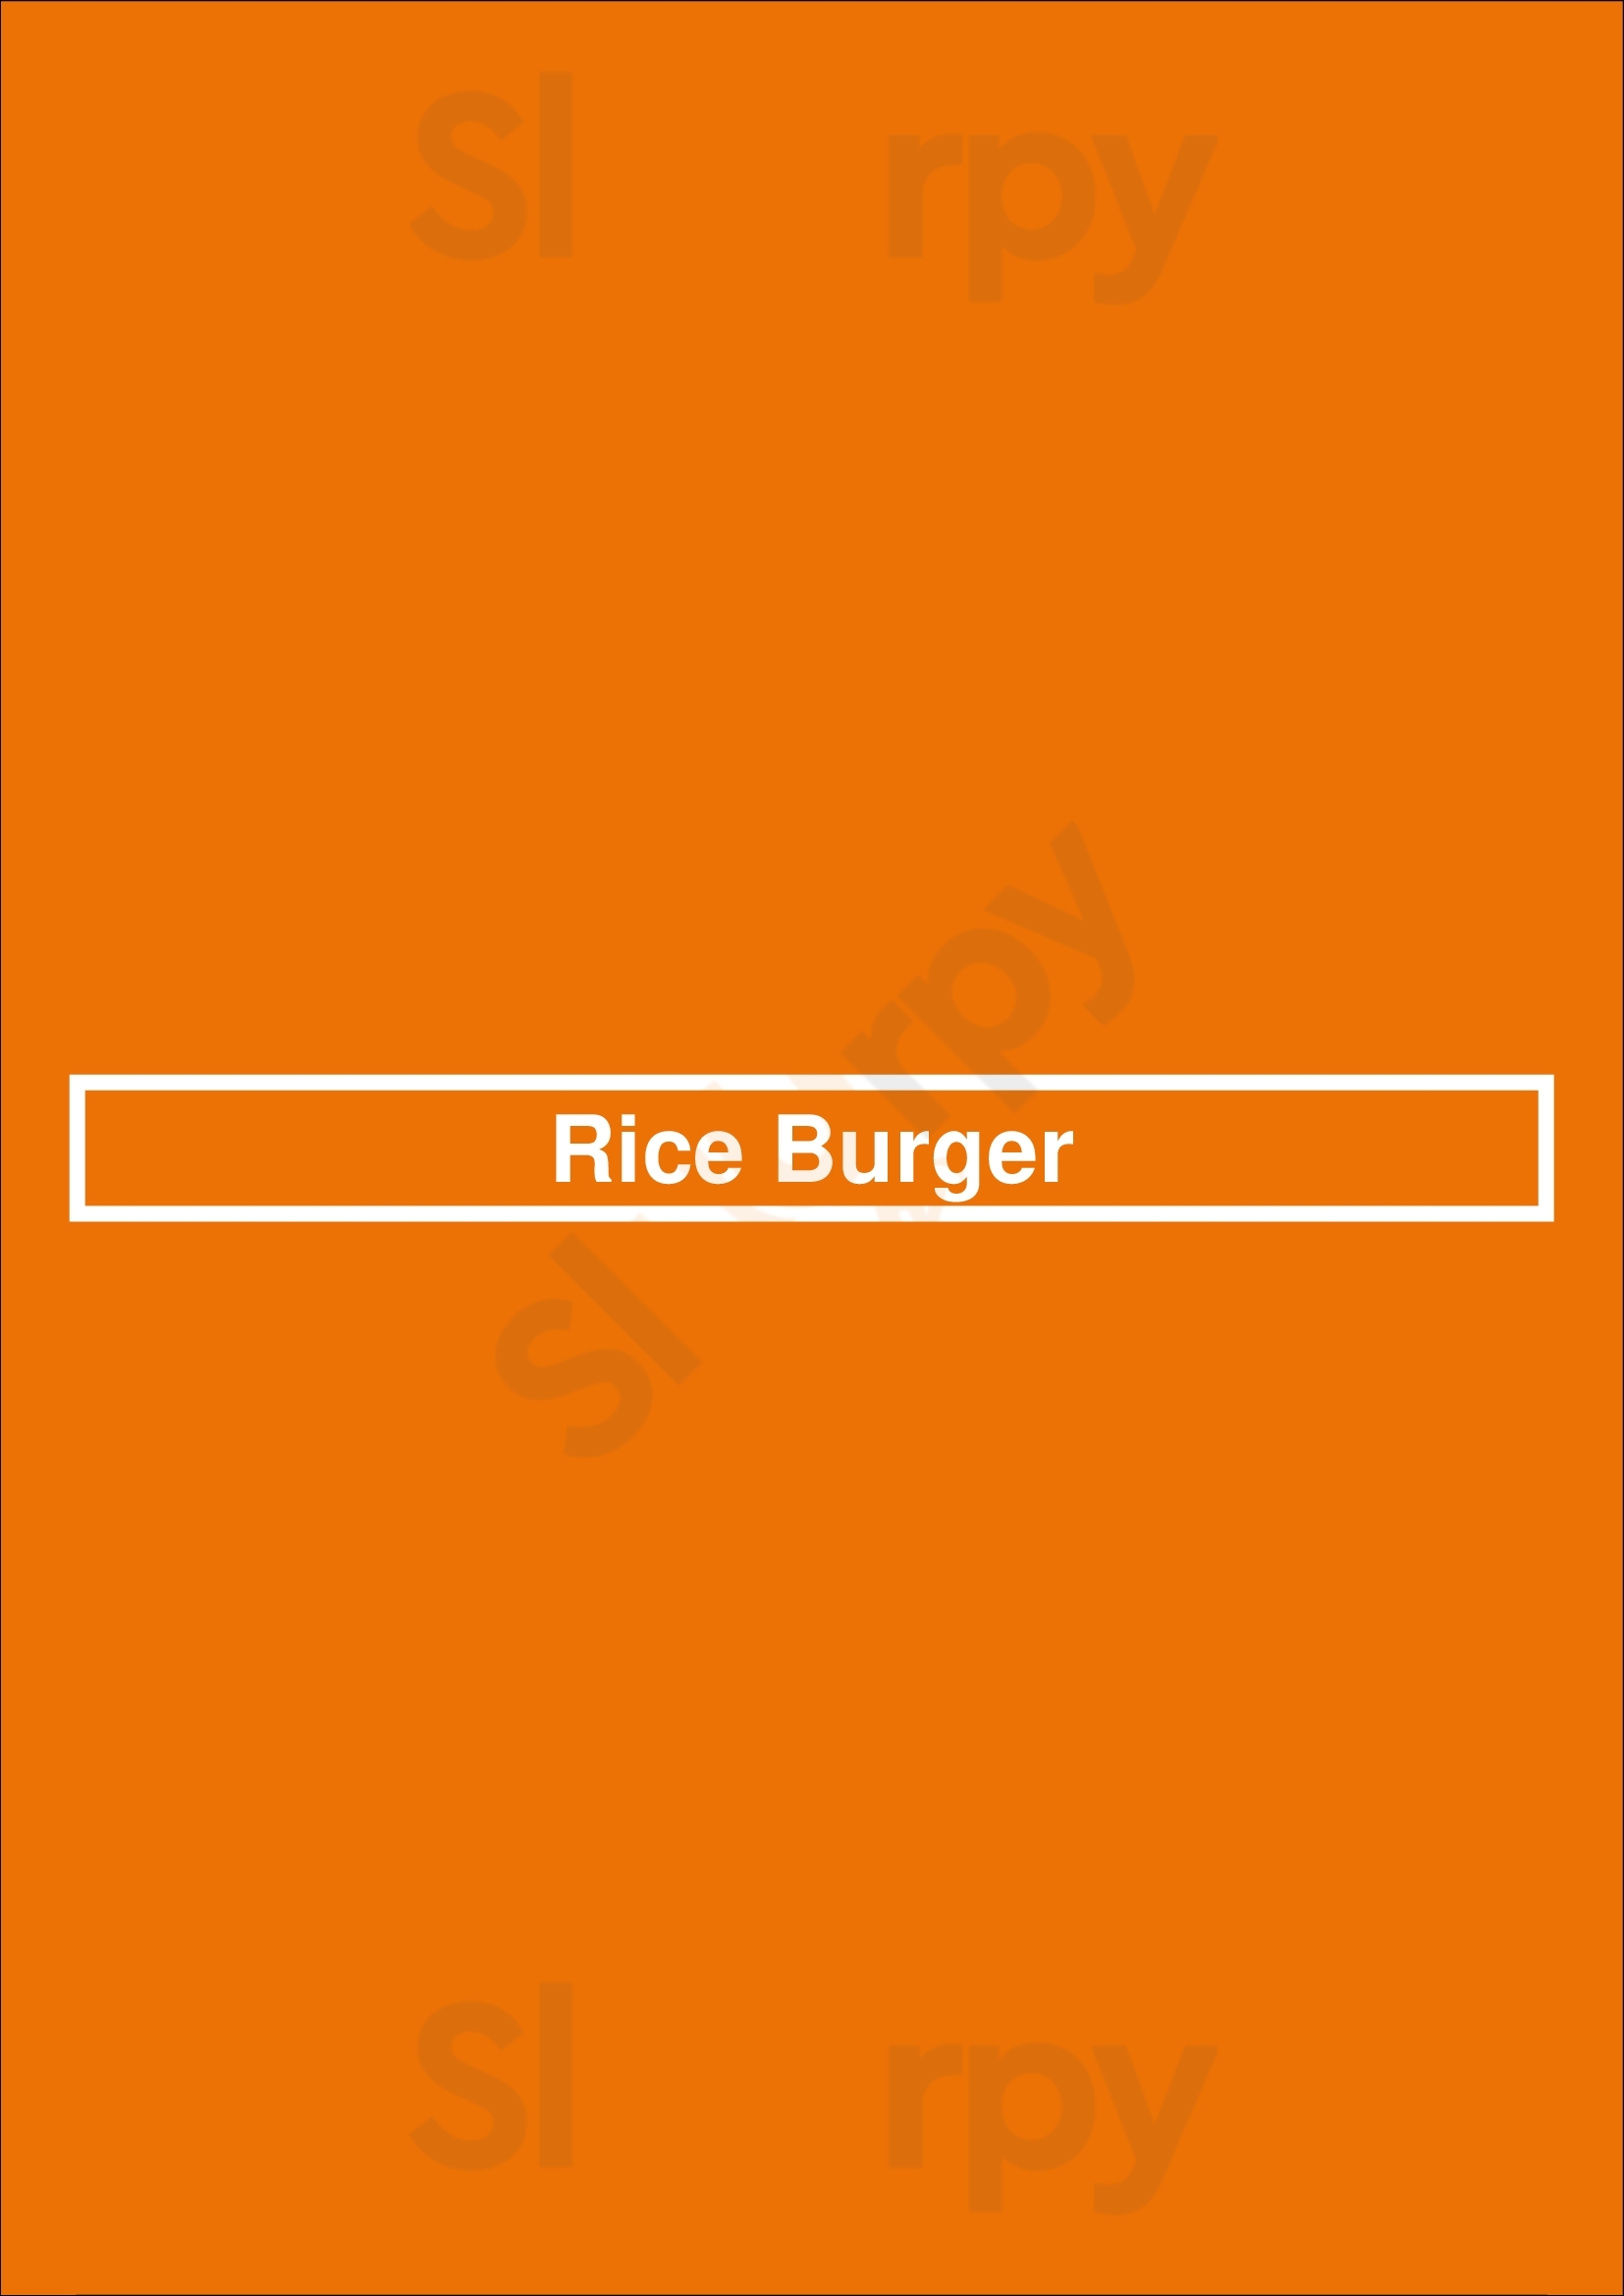 Rice Burger Vancouver Menu - 1